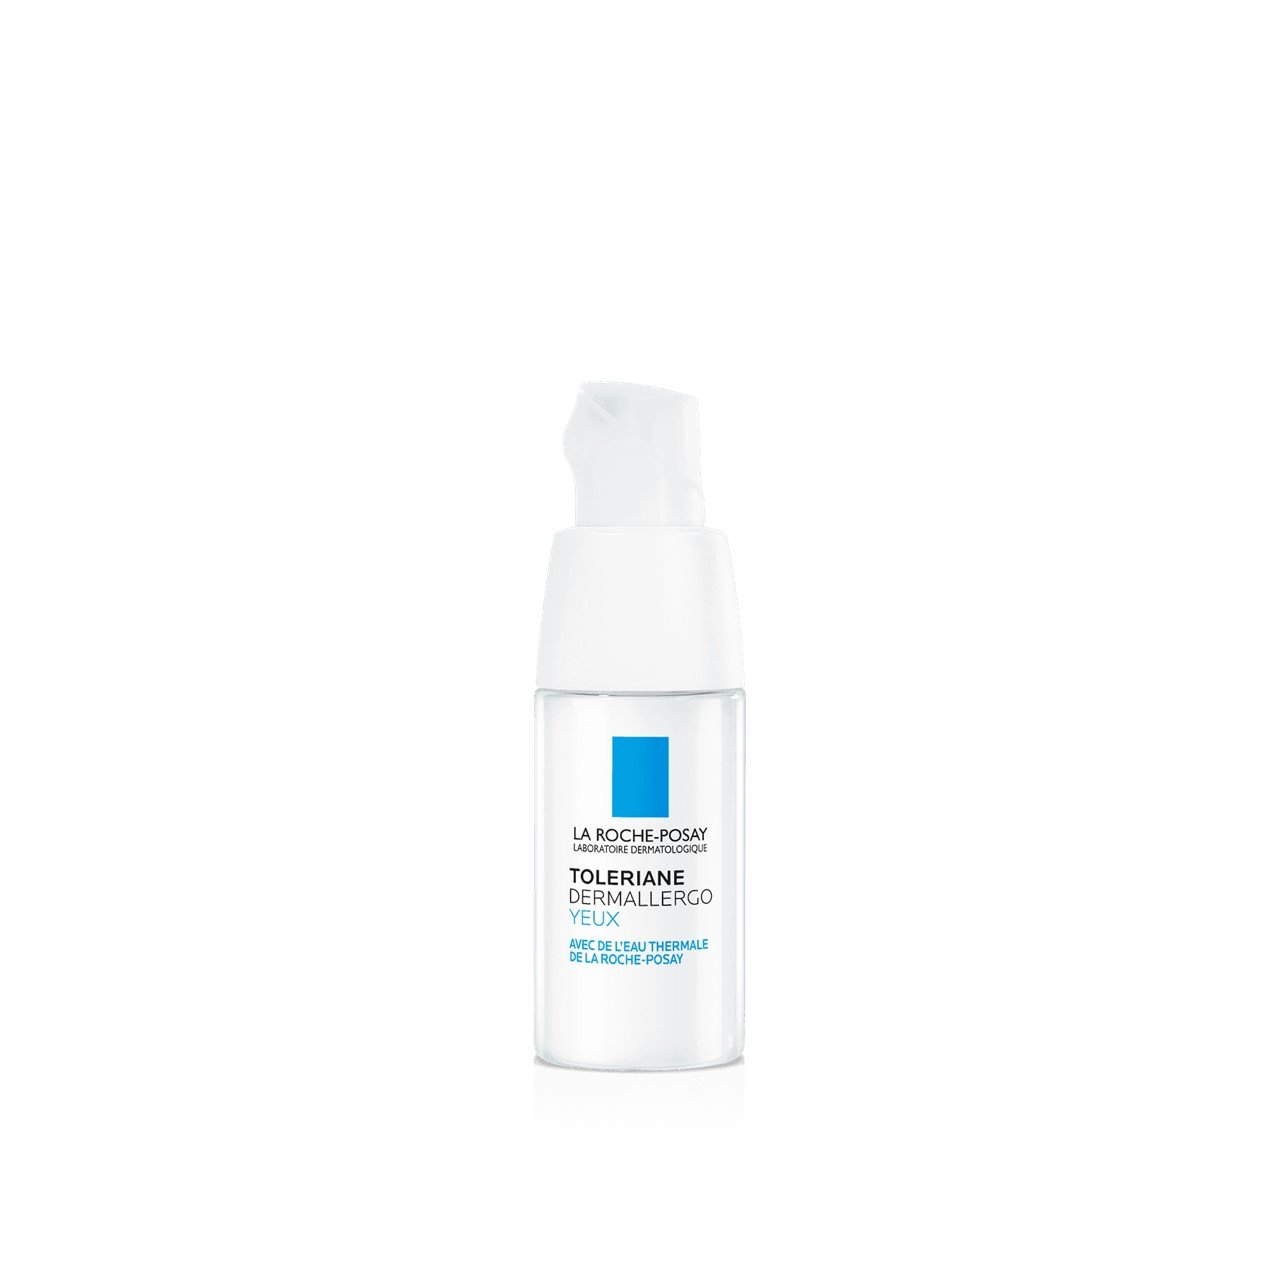 La Roche-Posay Toleriane Dermallergo Soothing Eye Cream 20ml (0.68fl oz)